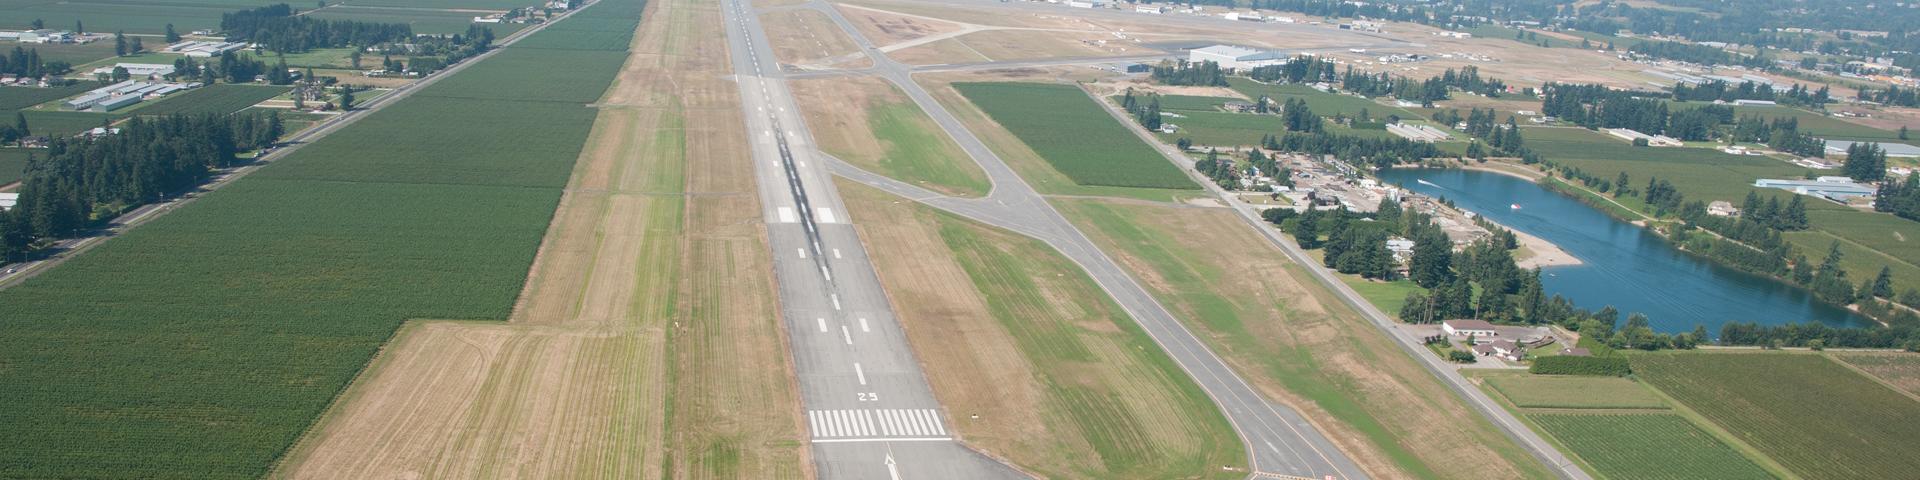 Image of runway